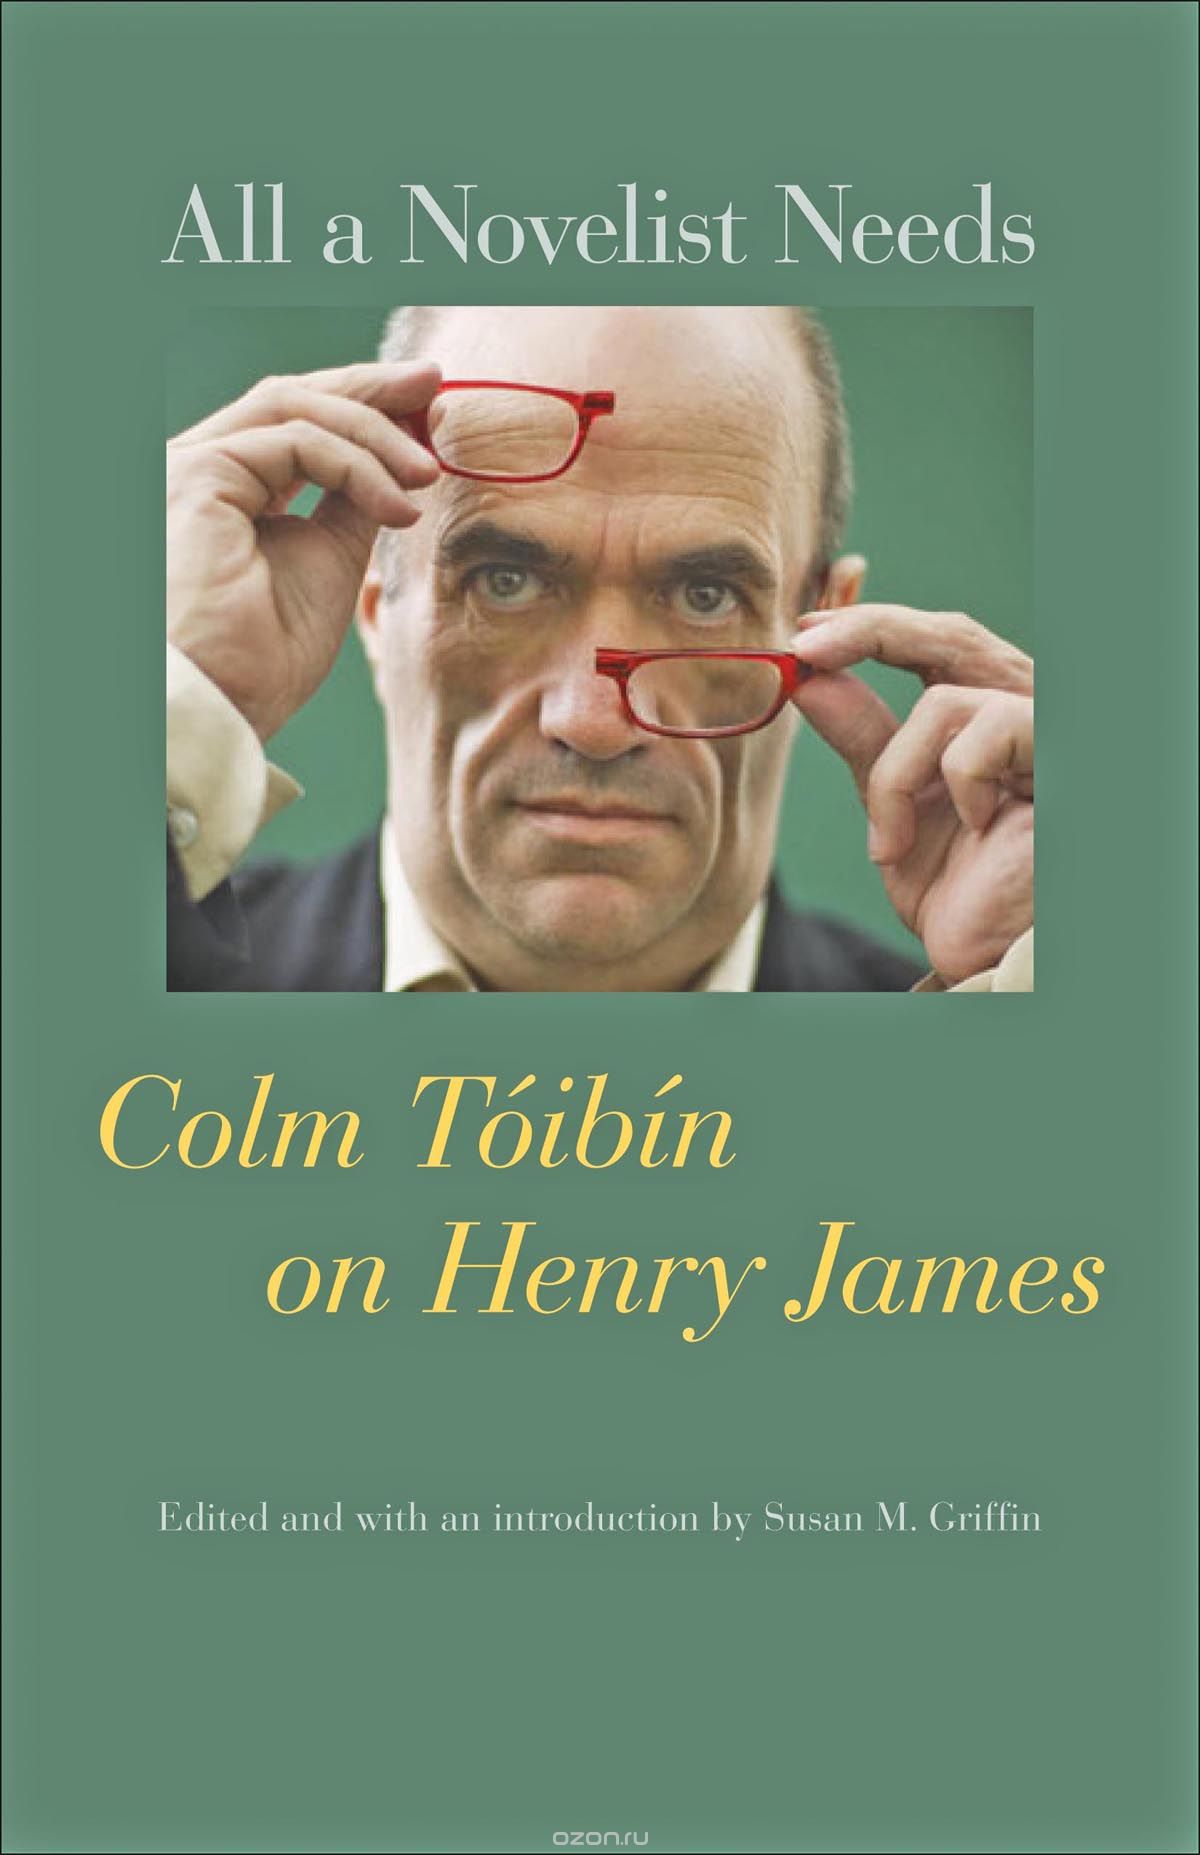 All a Novelist Needs – Colm Toibin on Henry James